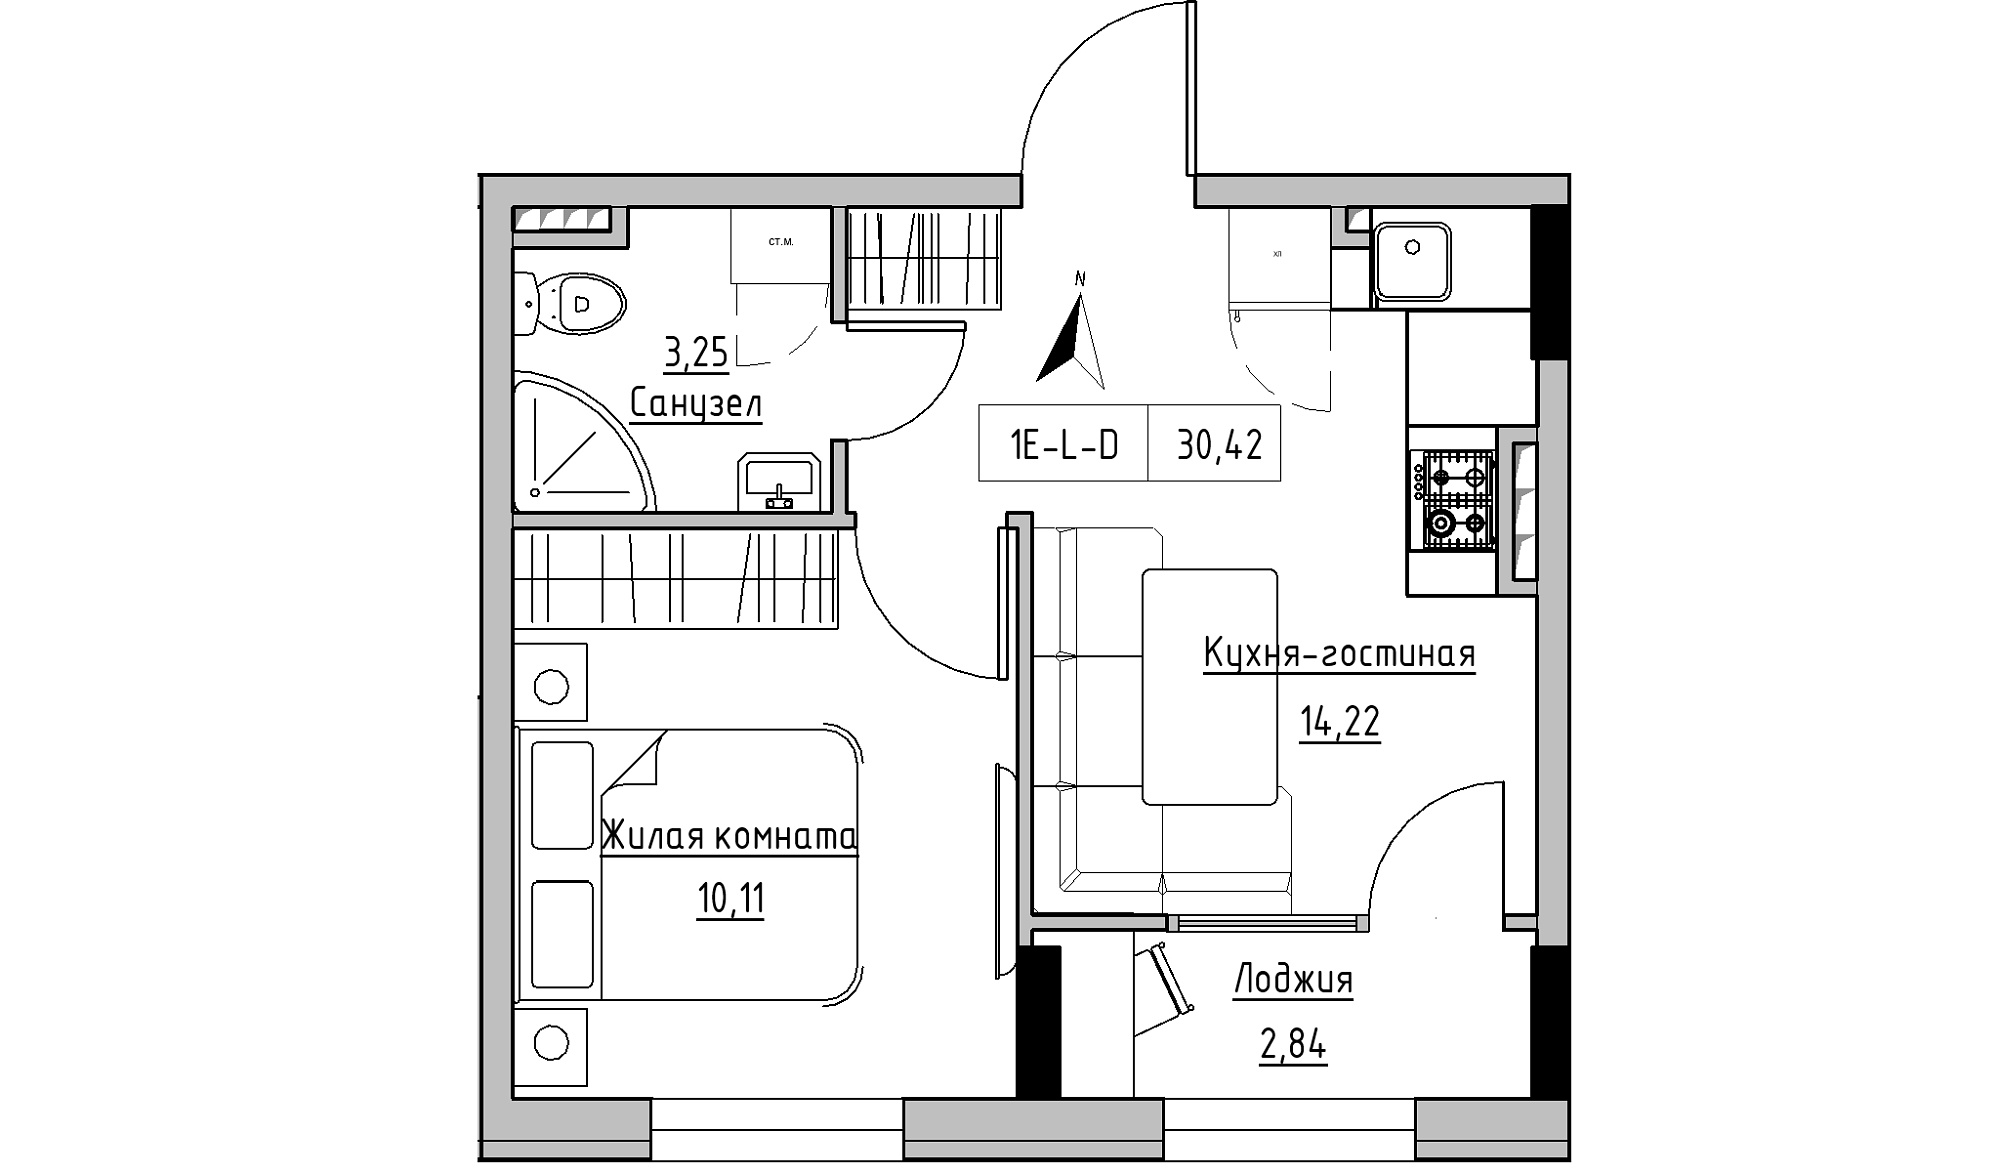 Planning 1-rm flats area 30.42m2, KS-025-03/0013.